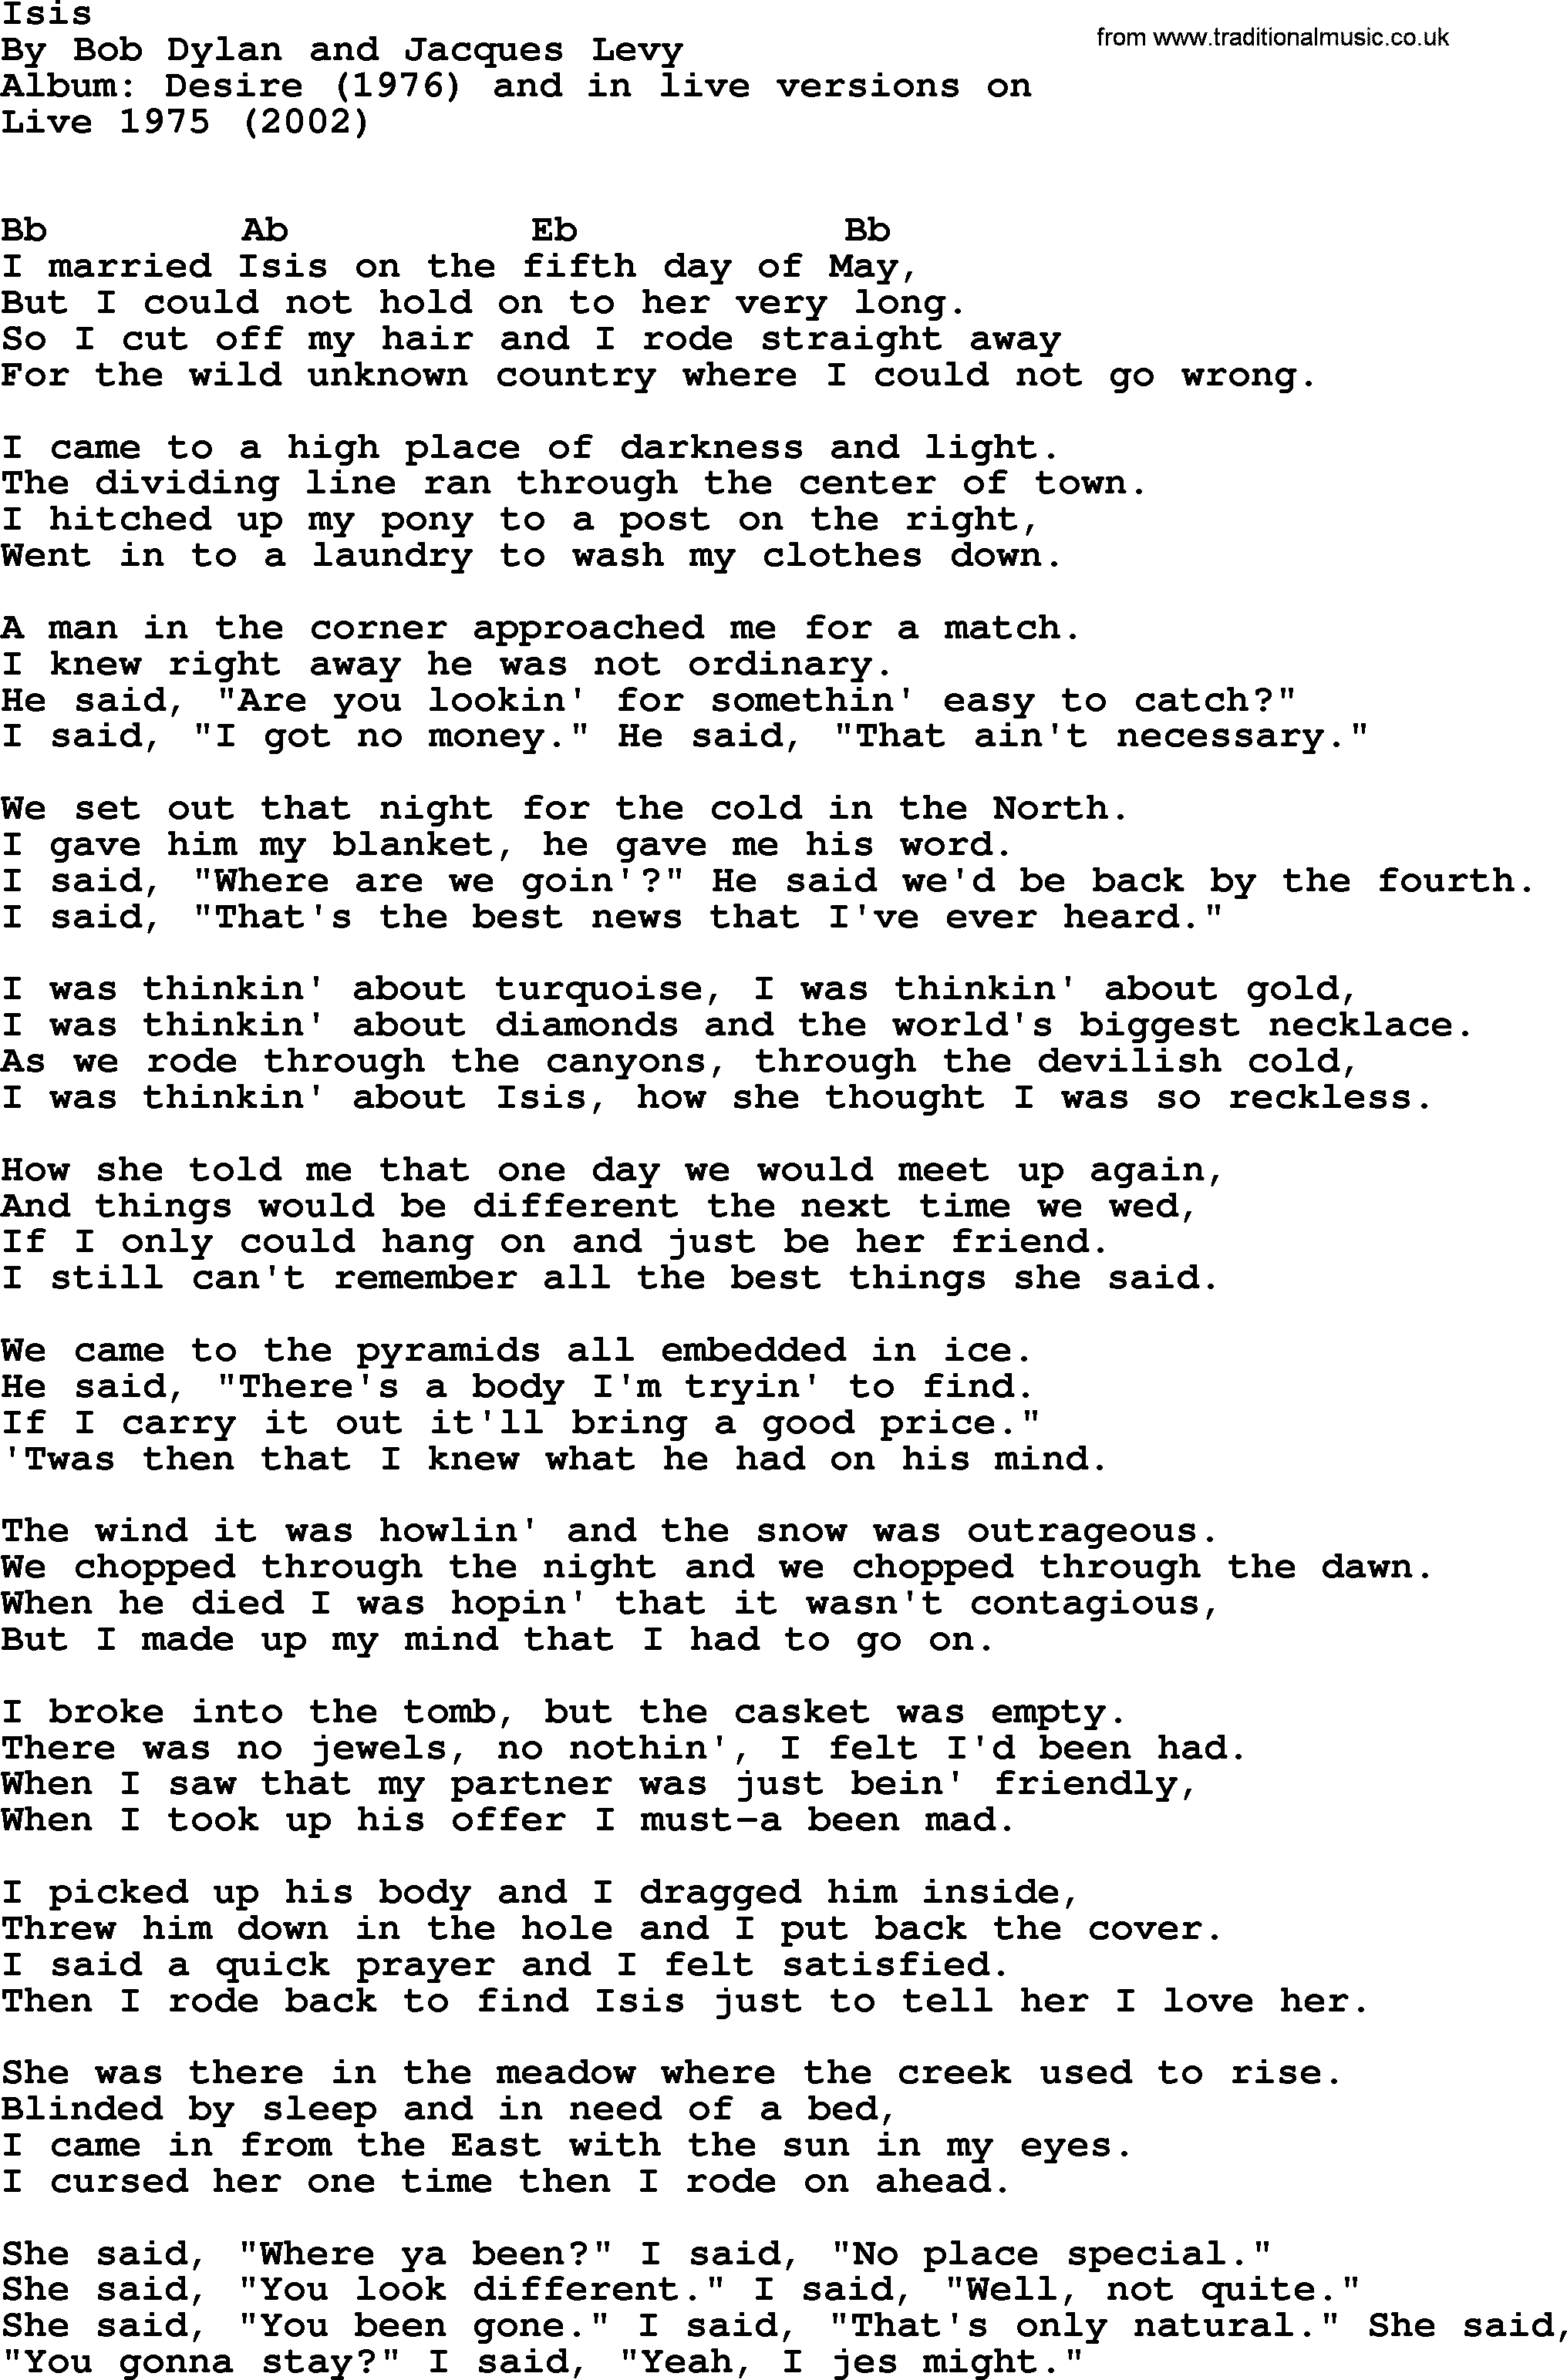 Bob Dylan song, lyrics with chords - Isis